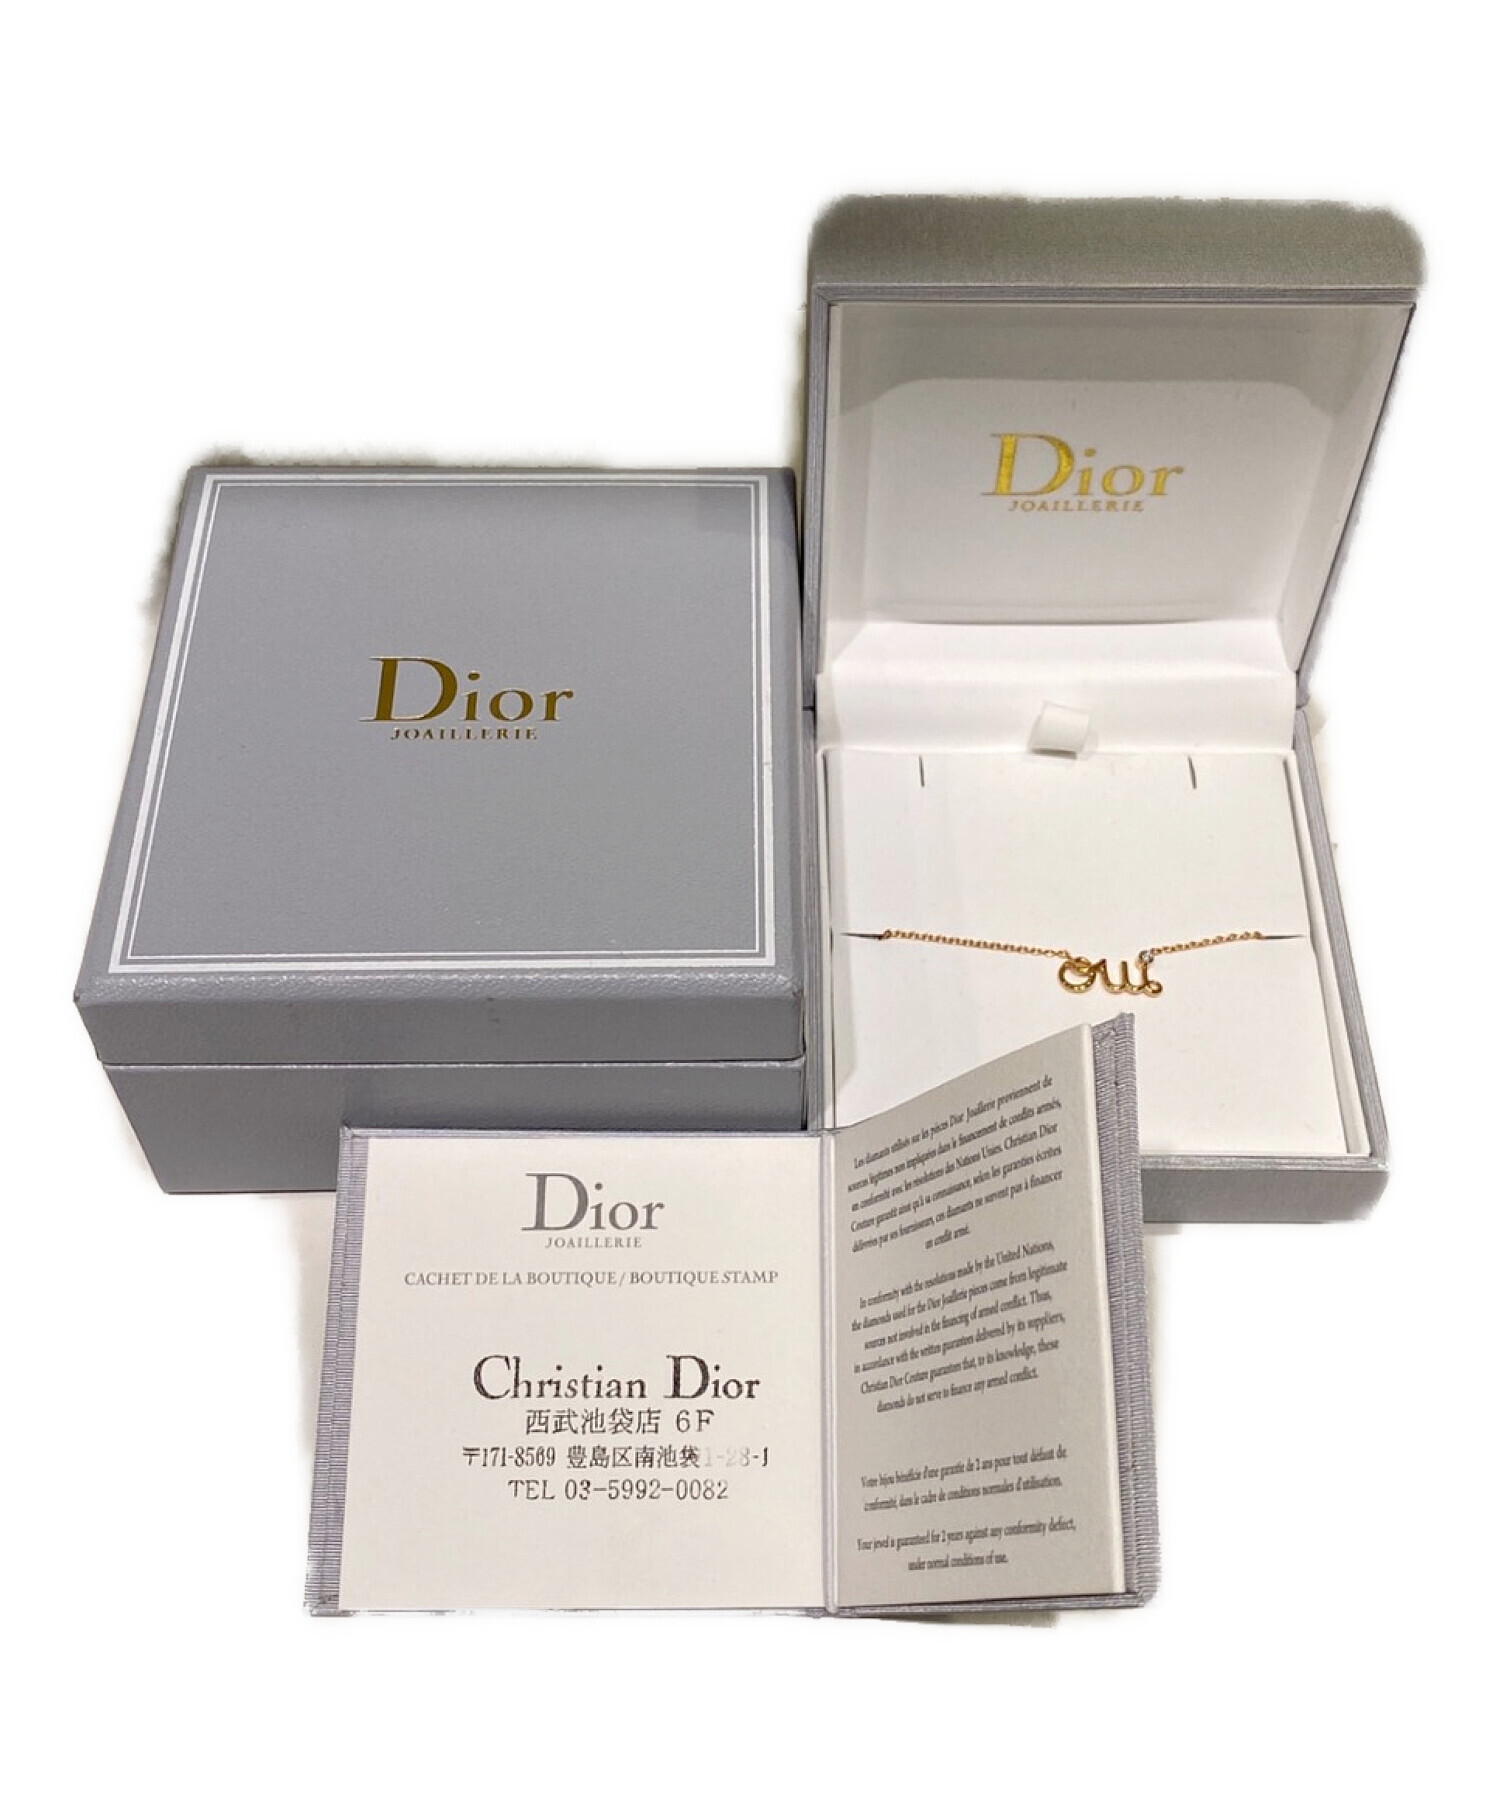 Dior ネックレス oui 【ほぼ新品】限界お値下げ - アクセサリー